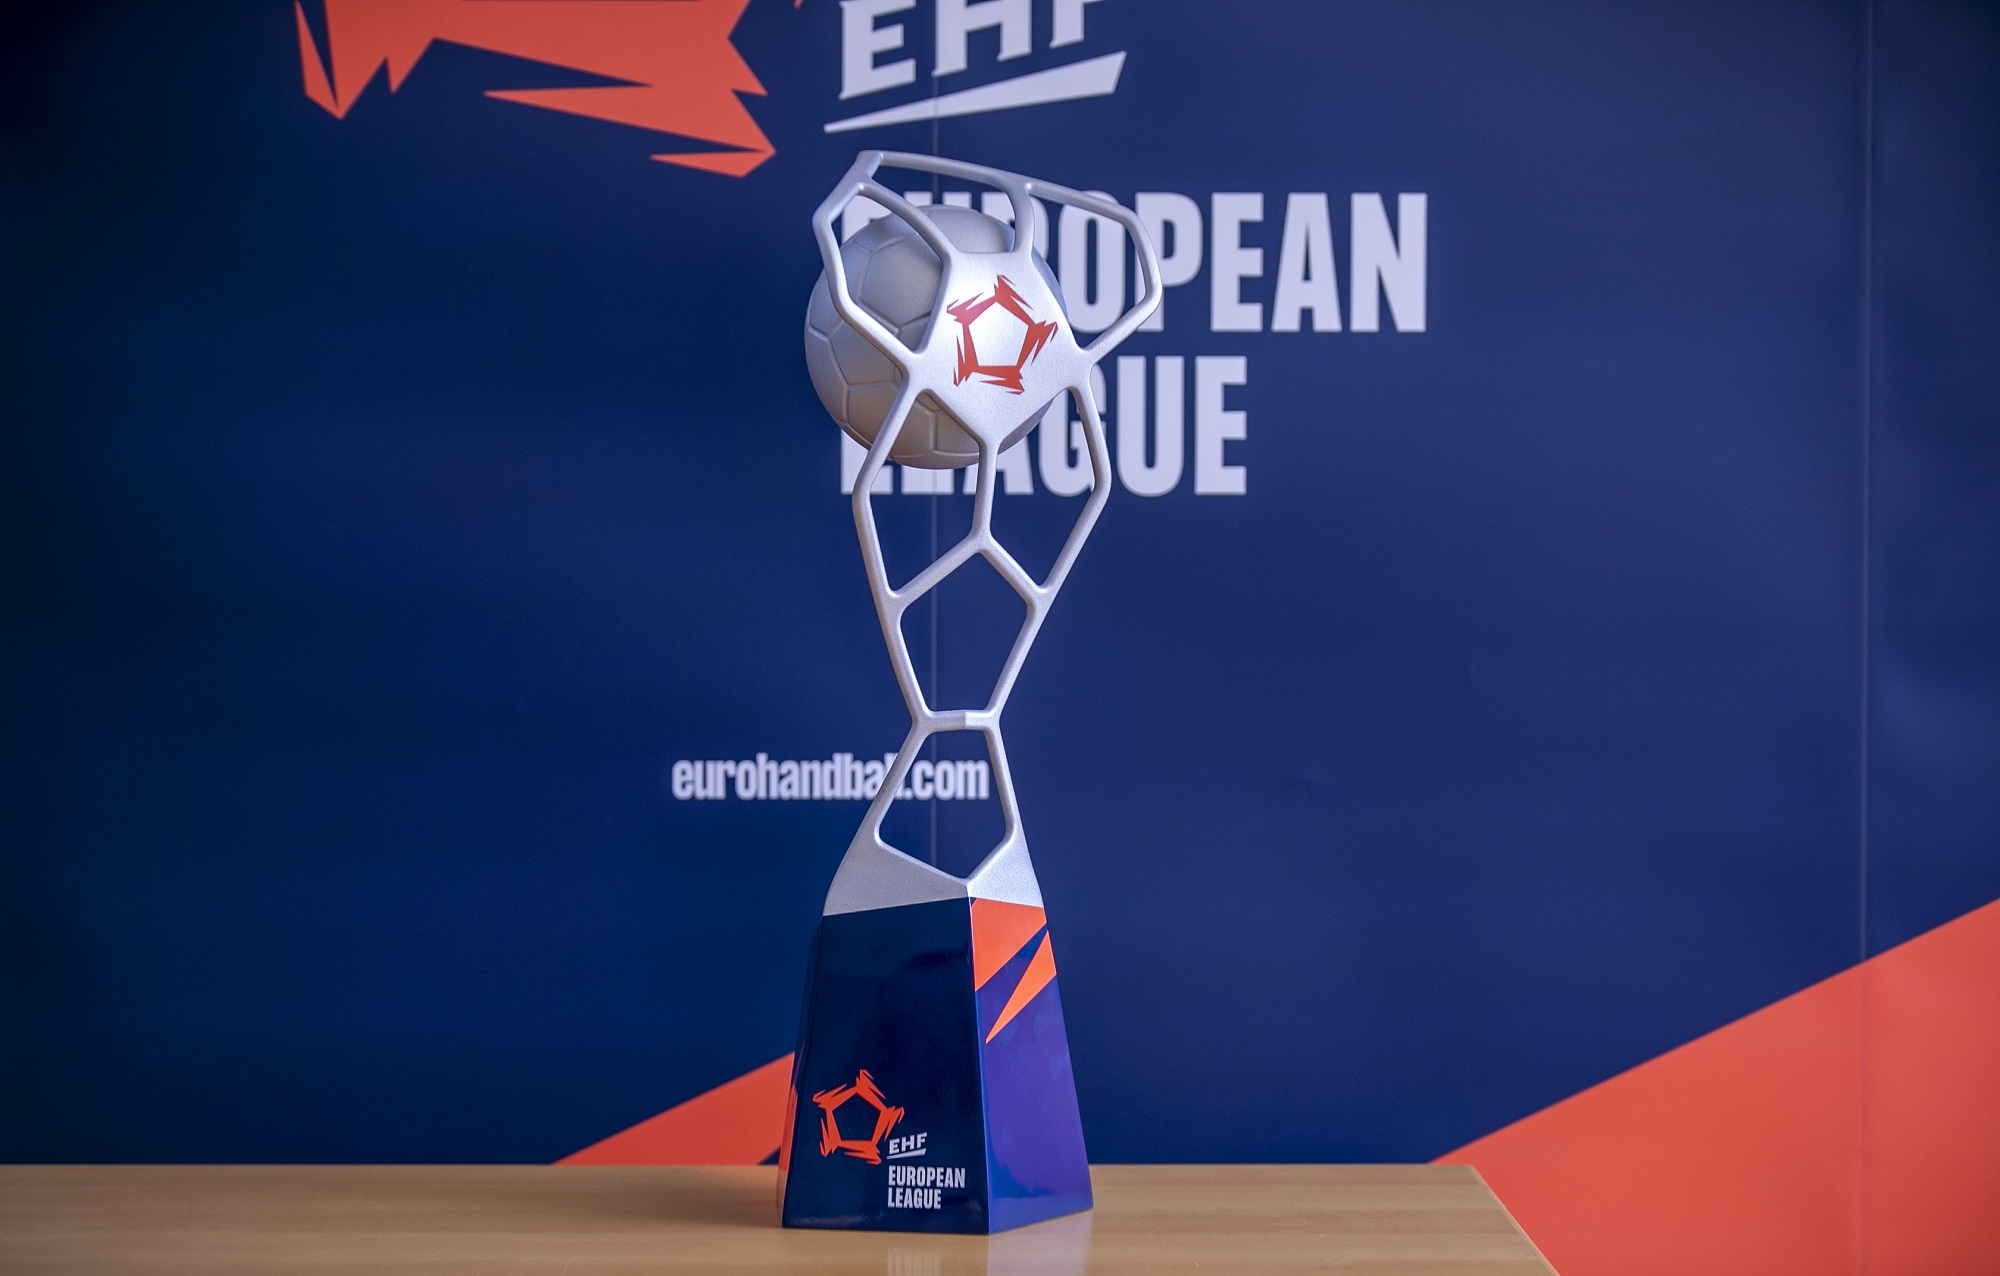 European League Men finalists await semi-final opponents